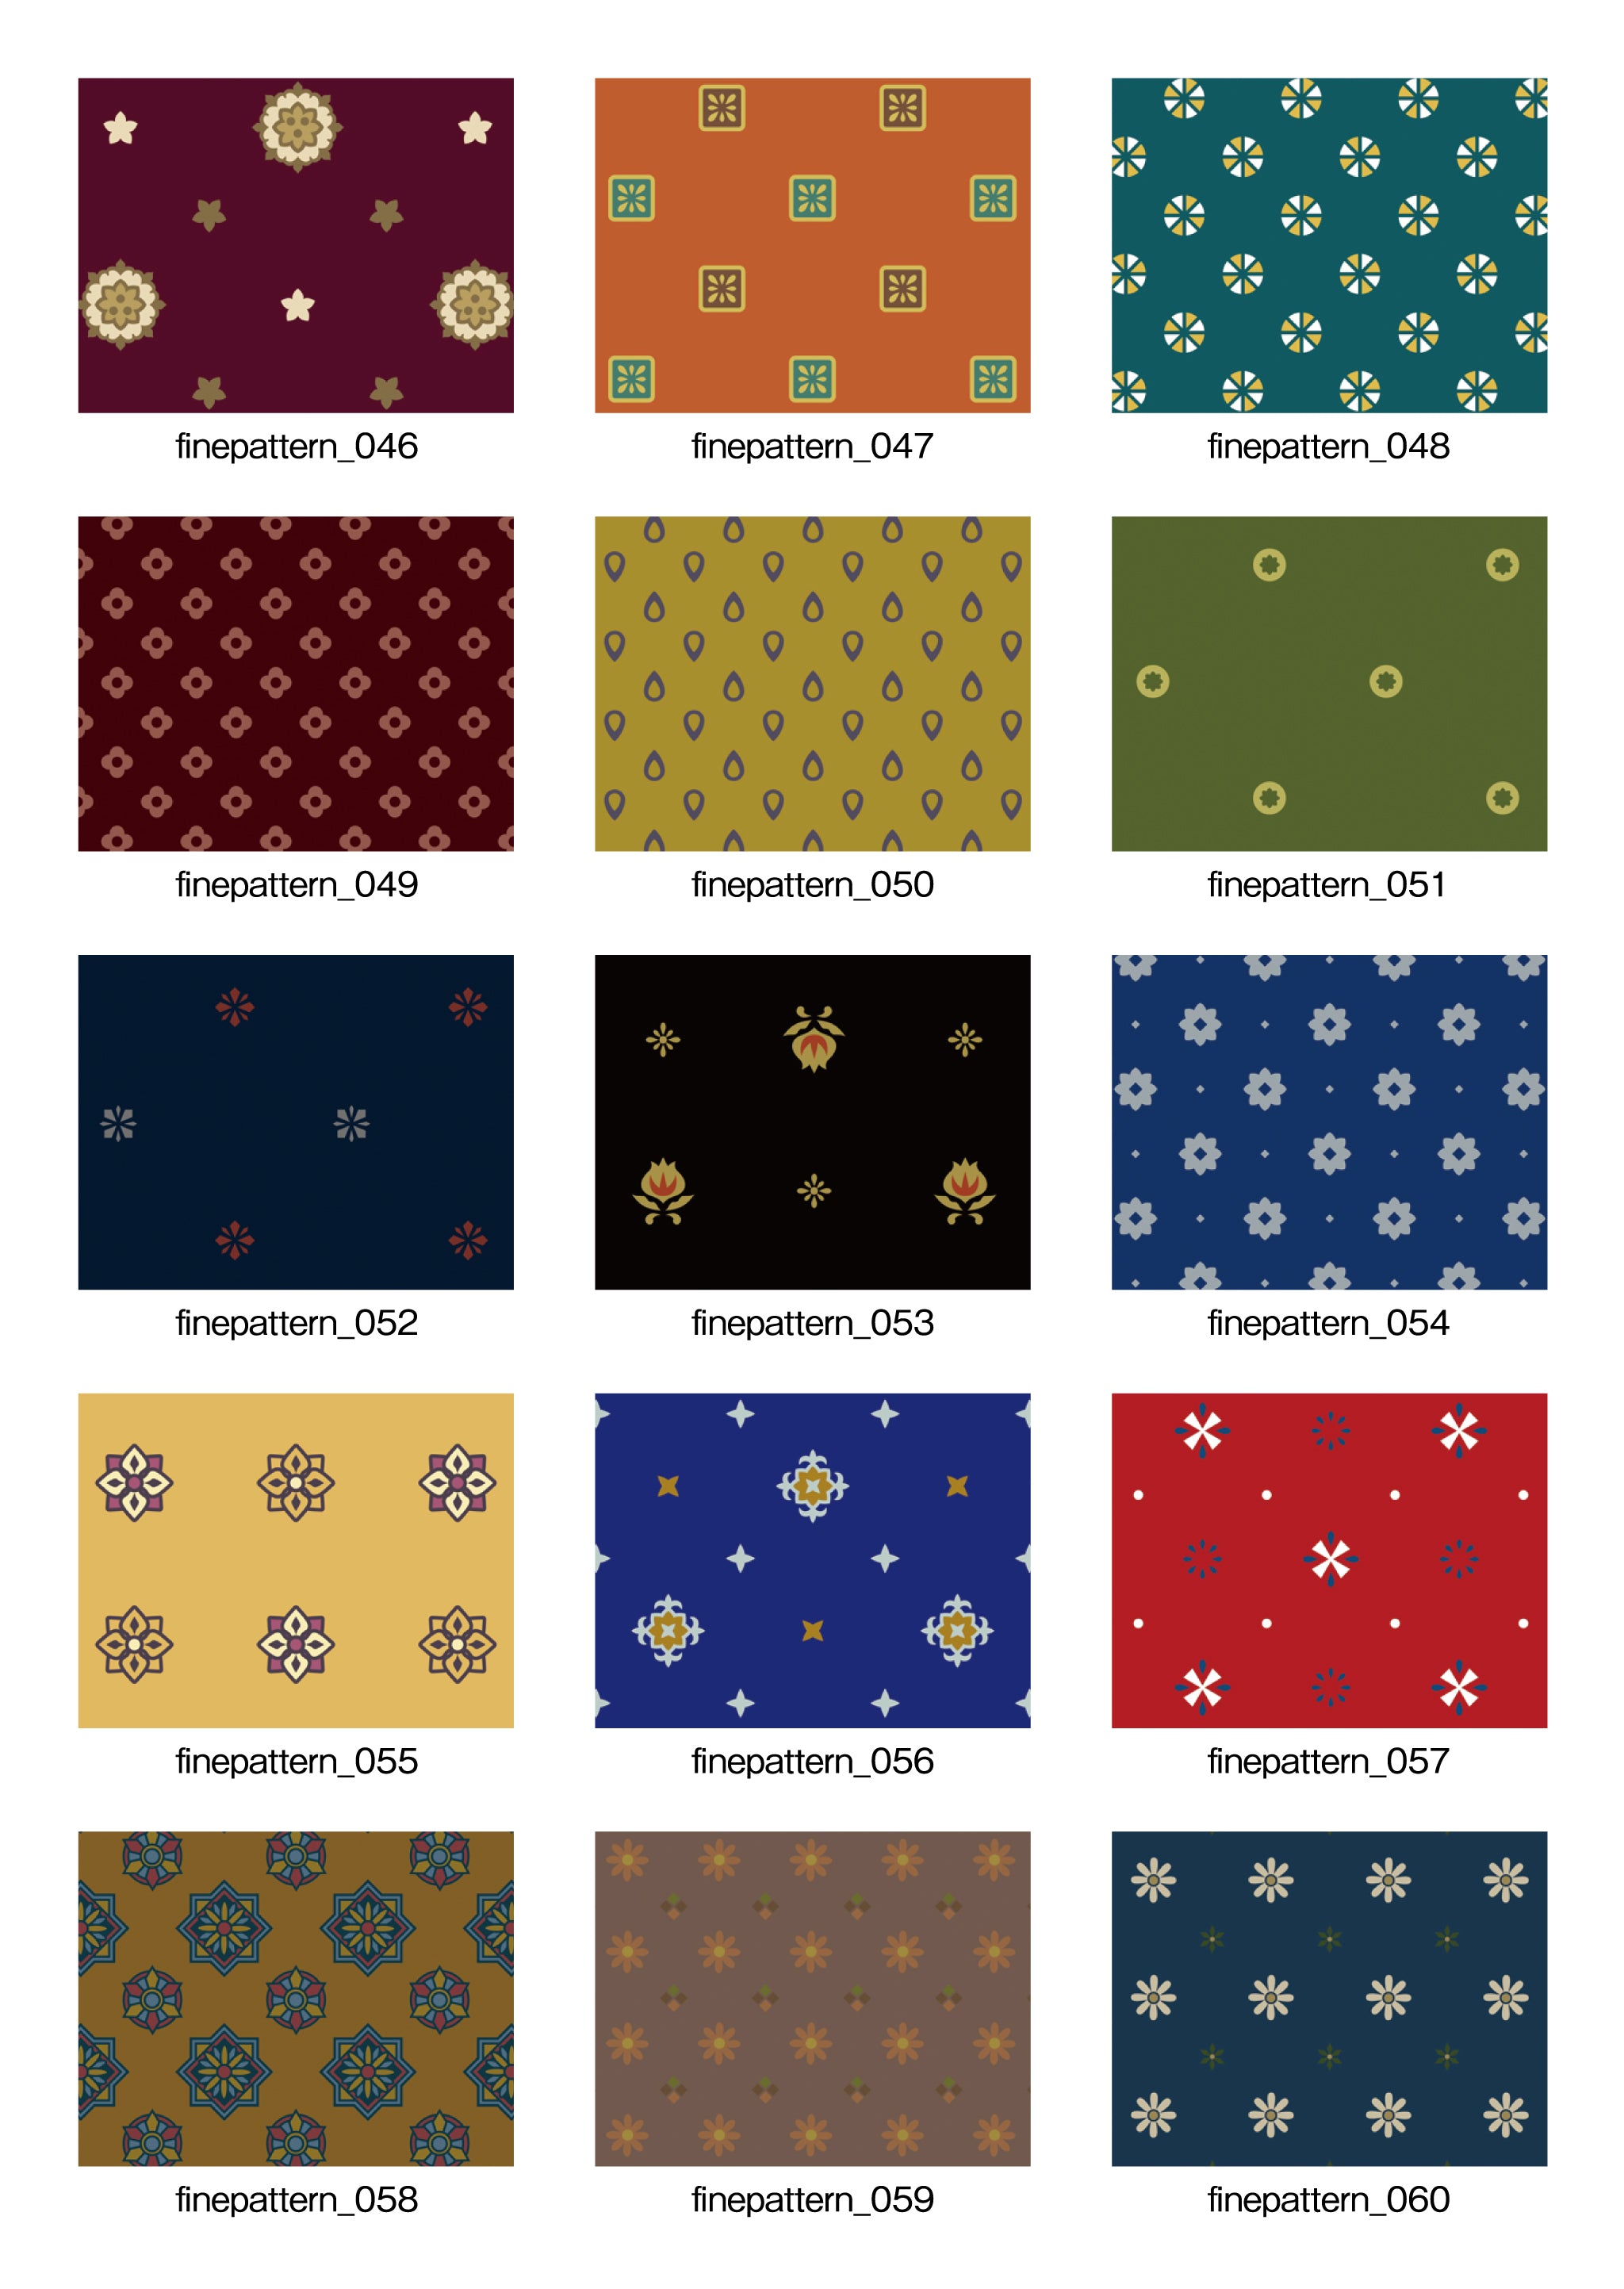 「Pattern Collection」10.Fine Pattern【小紋】